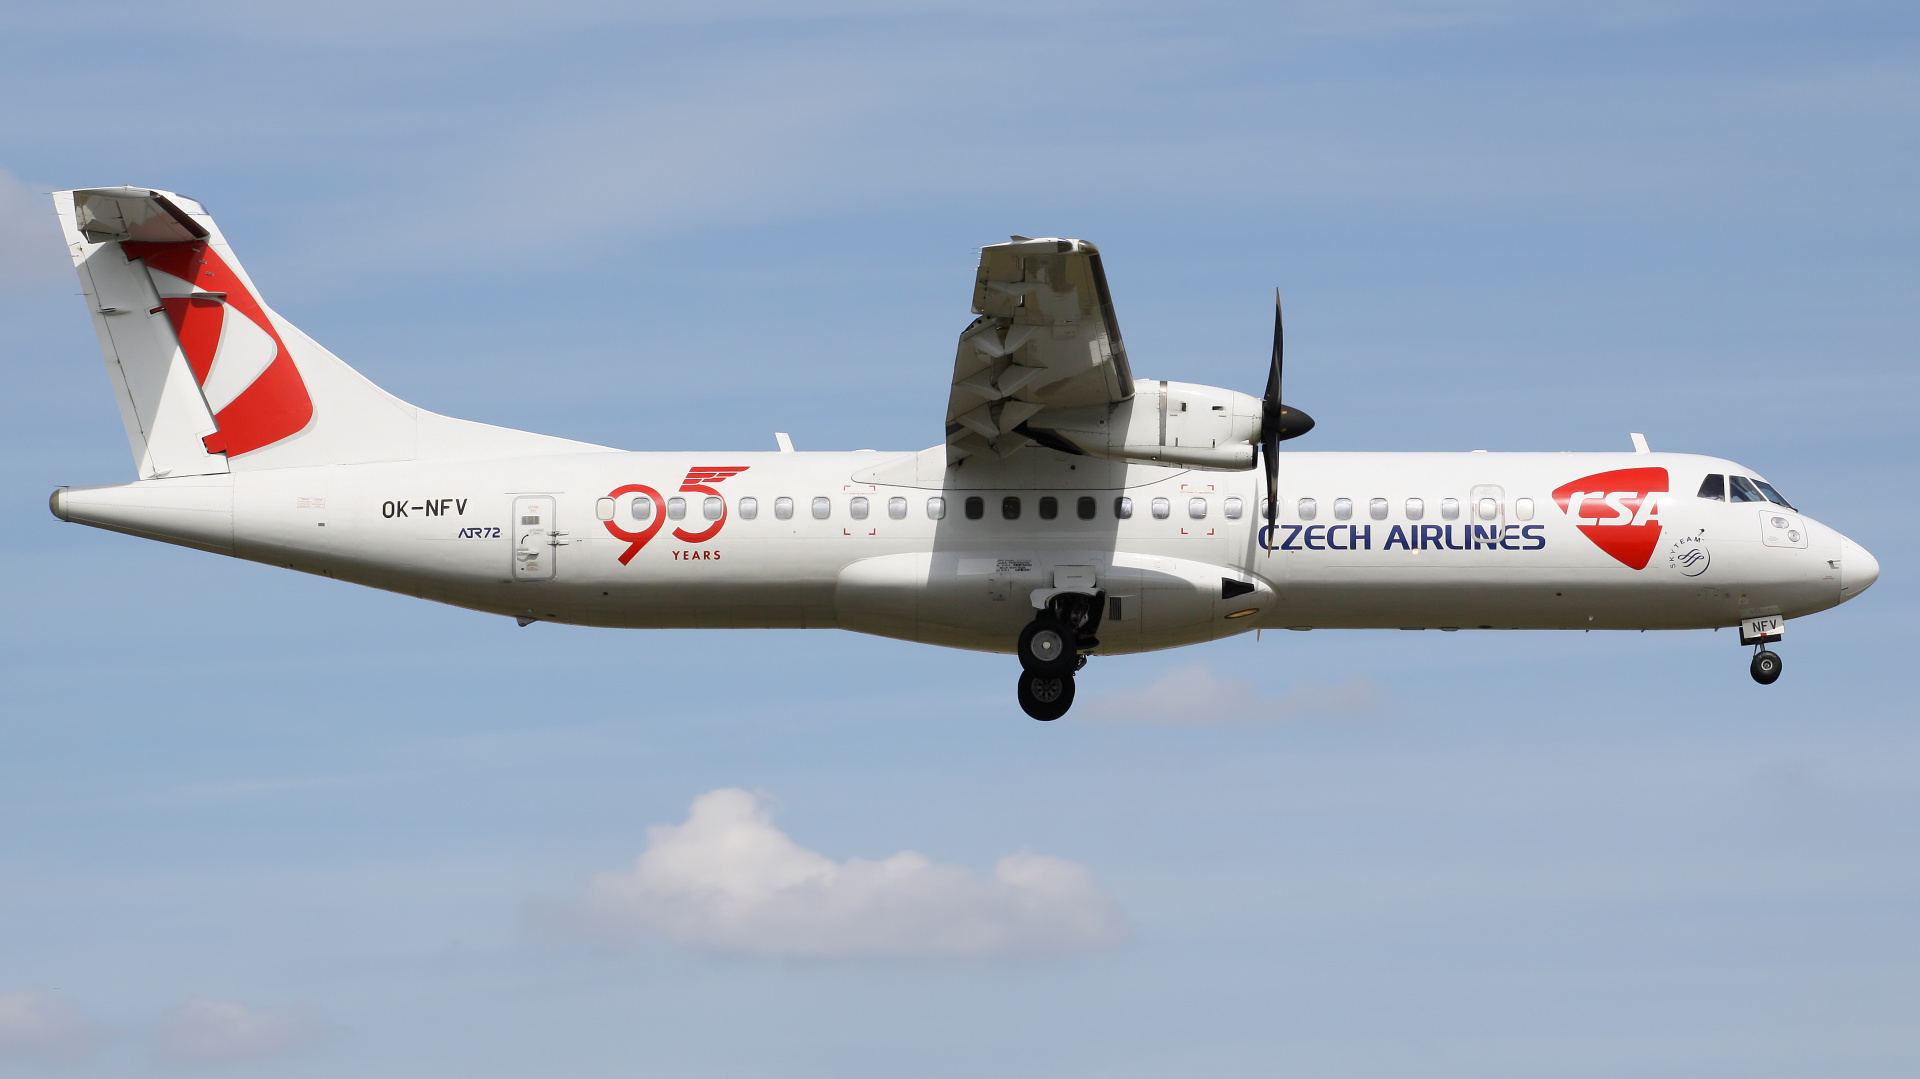 OK-NFV (95 years livery) (Aircraft » EPWA Spotting » ATR 72 » CSA Czech Airlines)